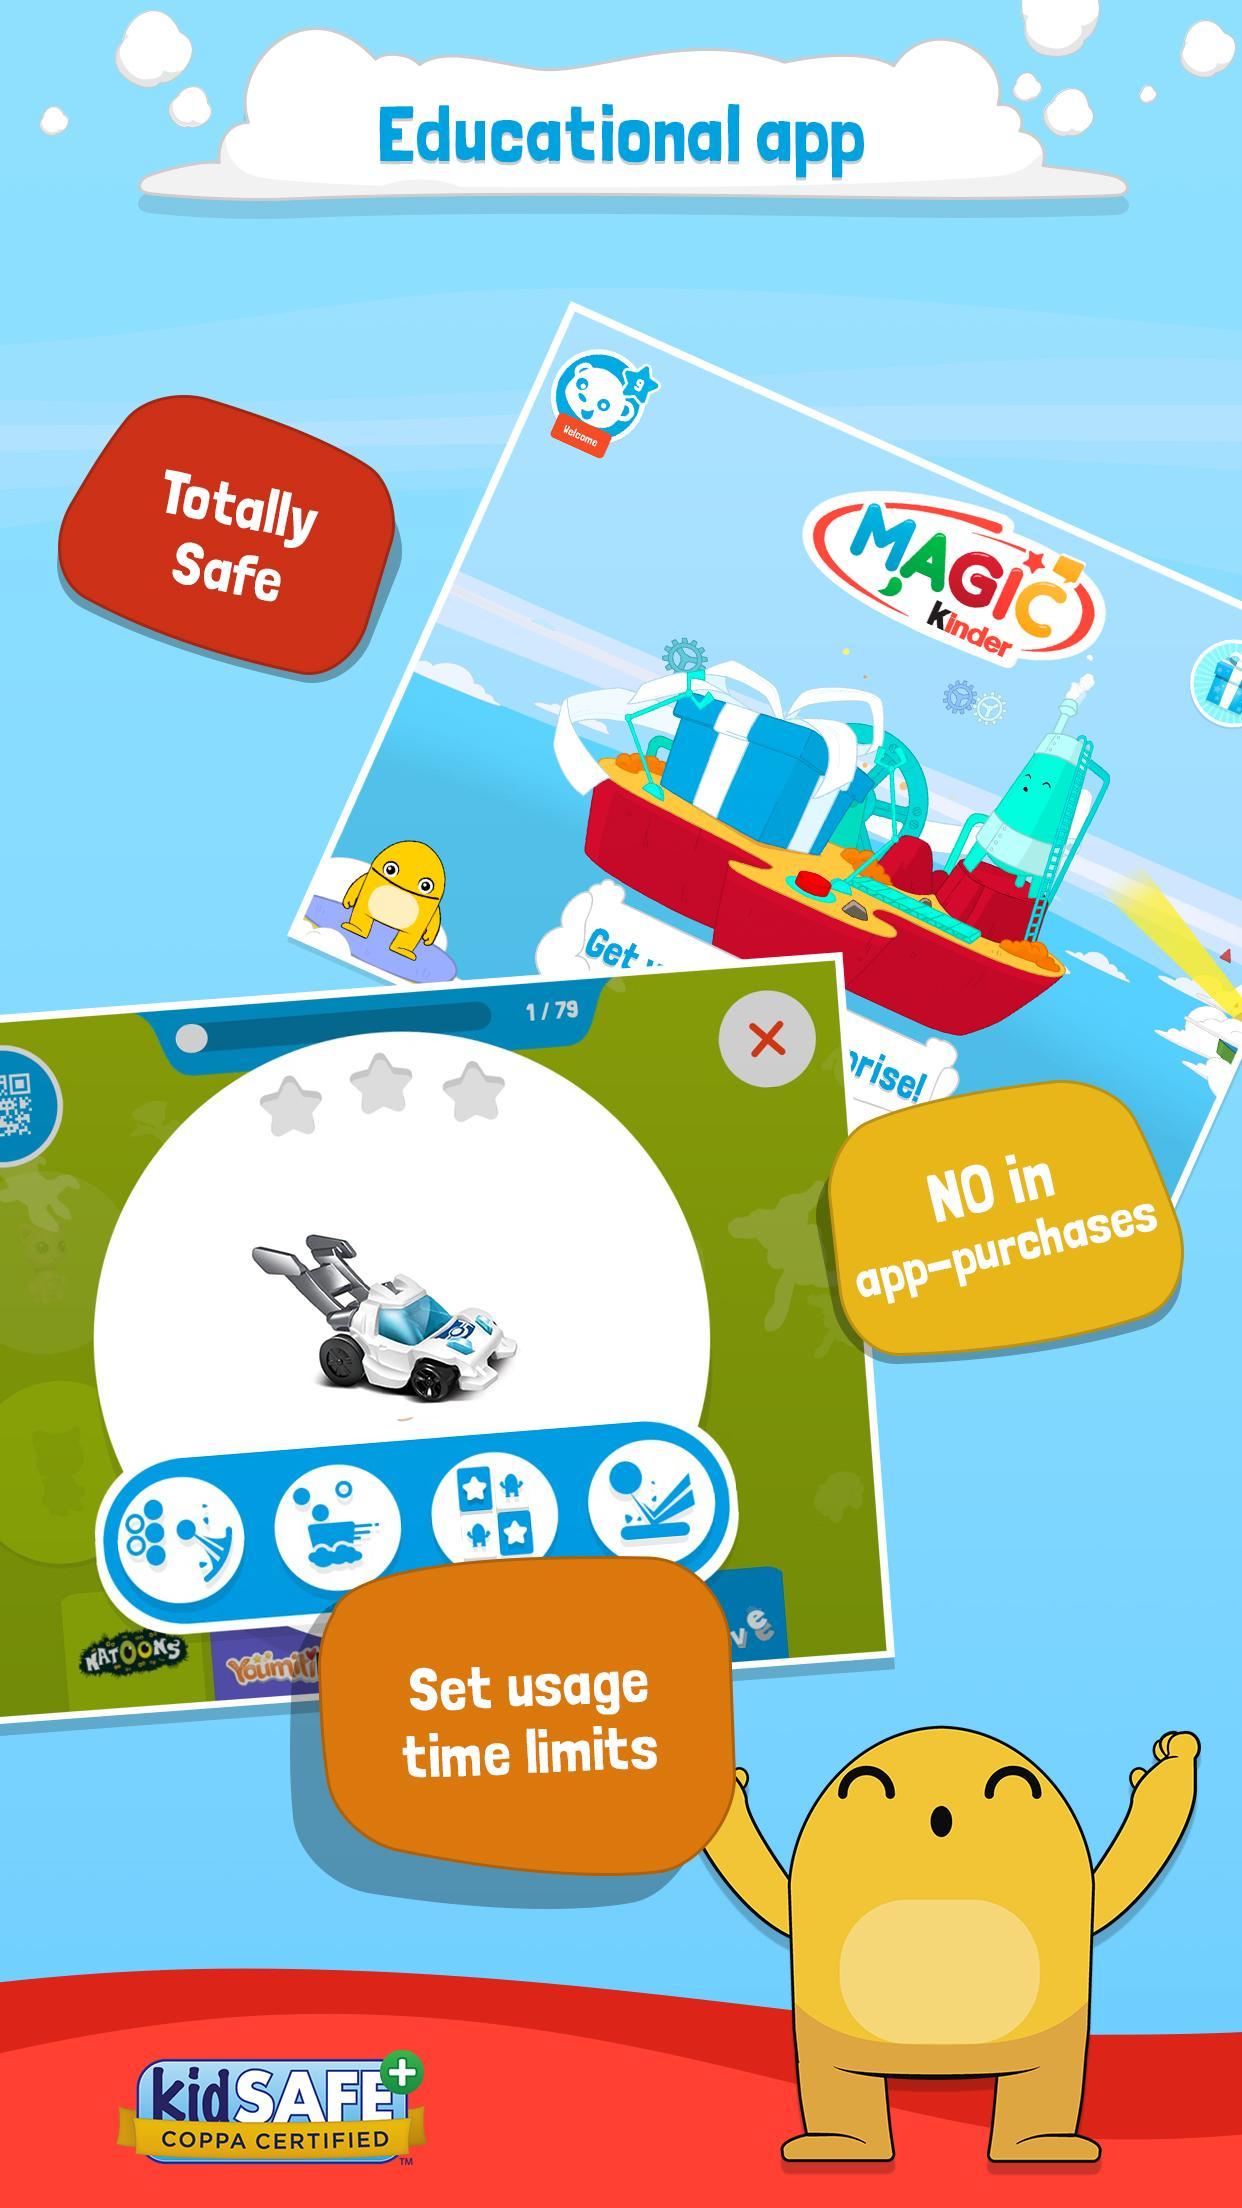 Magic Kinder Official App - Free Family Games 7.1.140 Screenshot 1